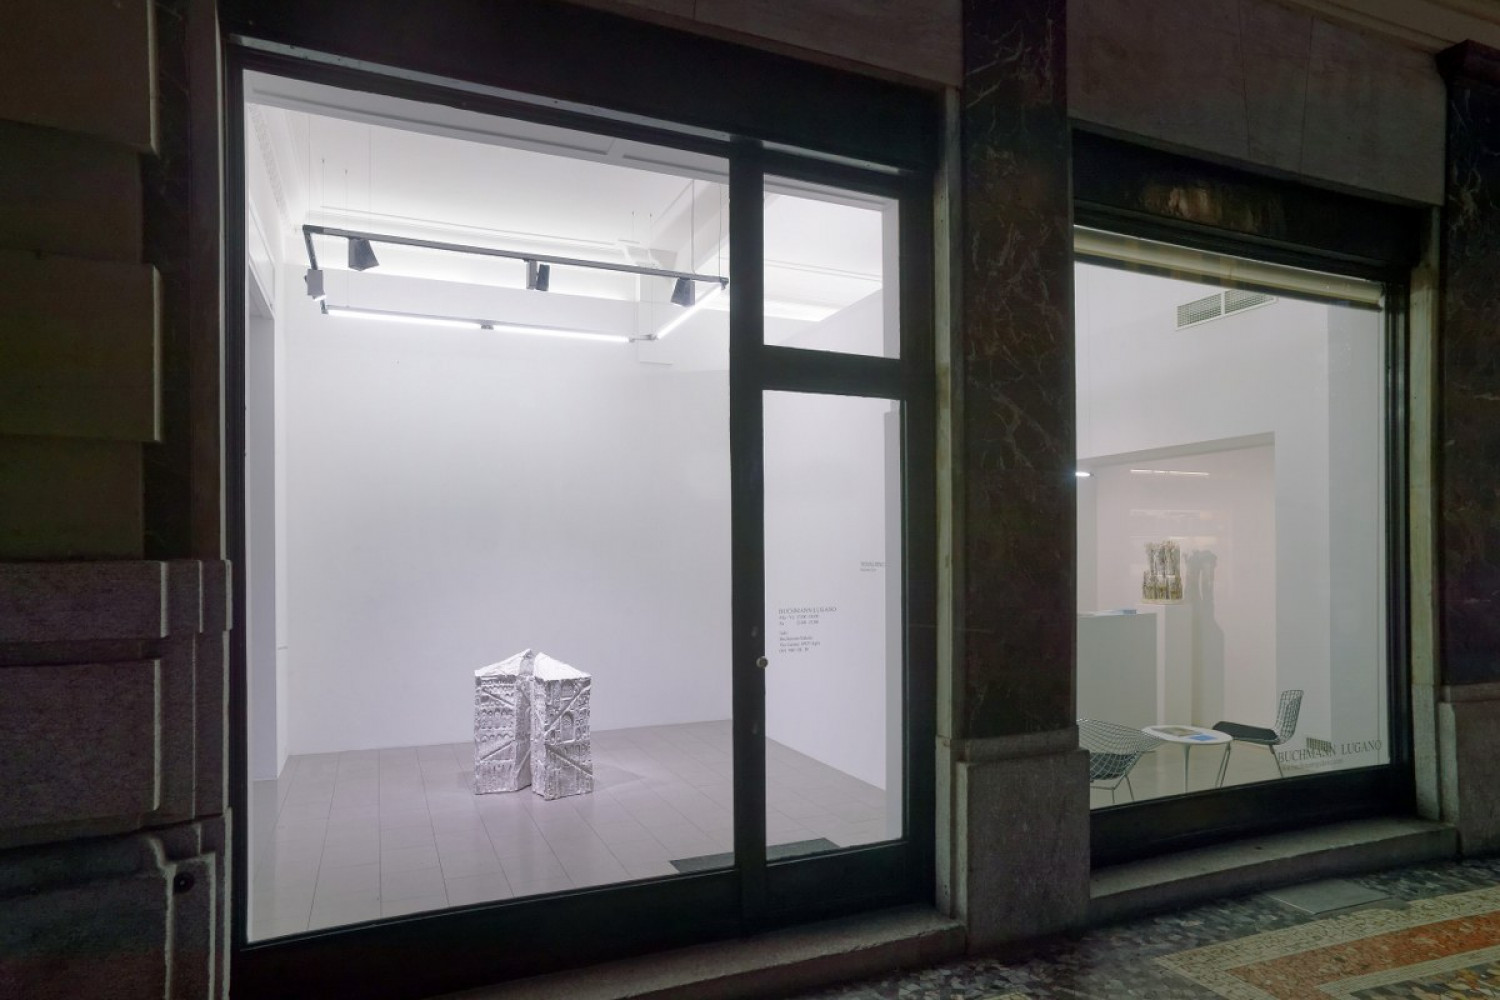 Thomas Virnich, Installation view, Buchmann Lugano, 2016